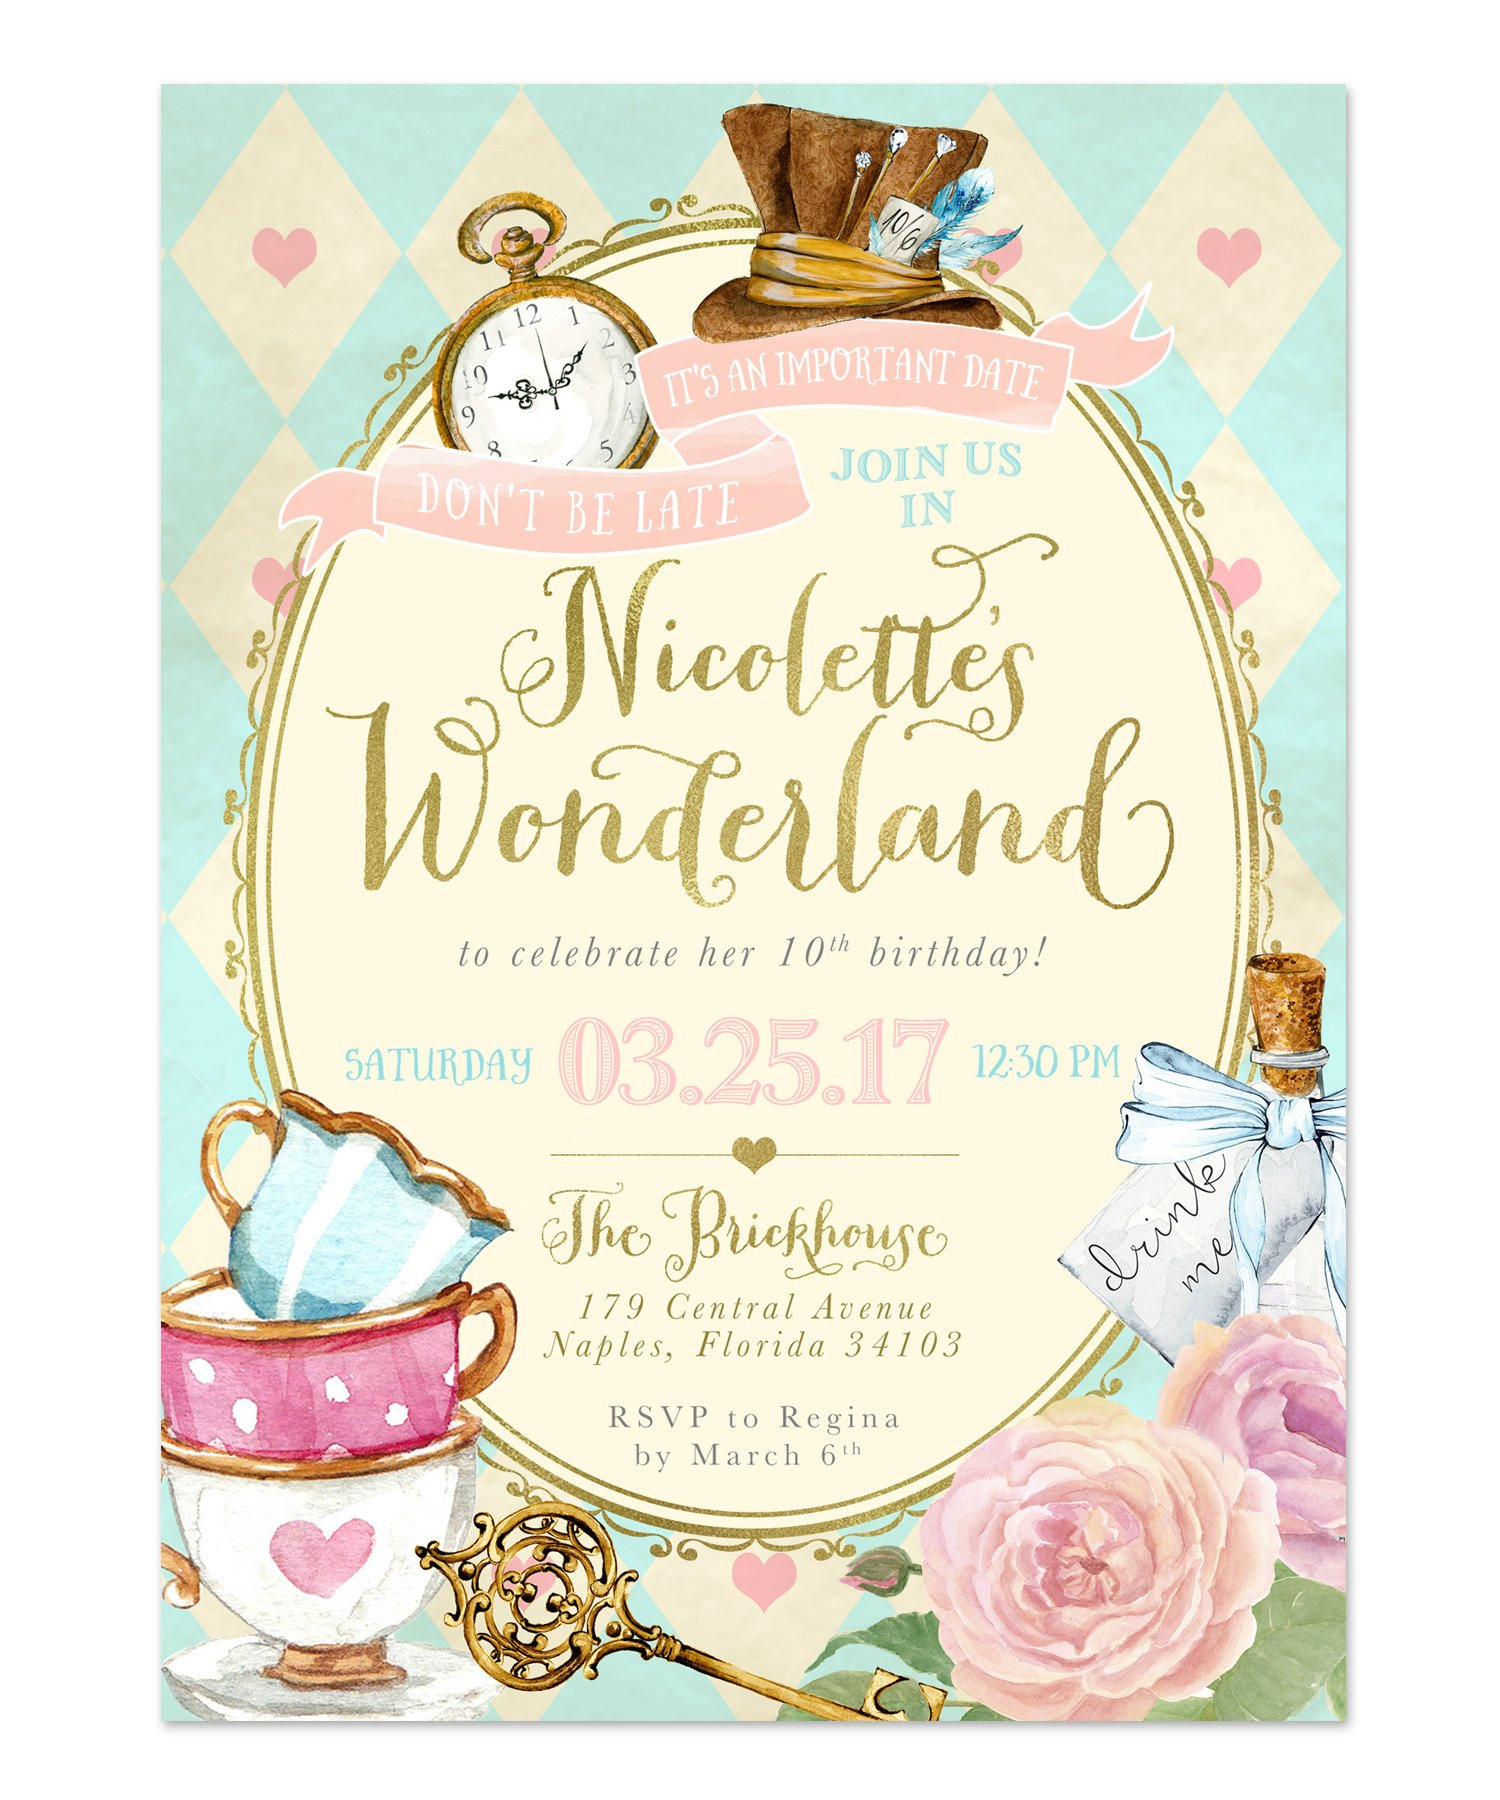 Best ideas about Alice In Wonderland Birthday Invitations
. Save or Pin Alice in Wonderland Birthday Party Invitation Girls Now.